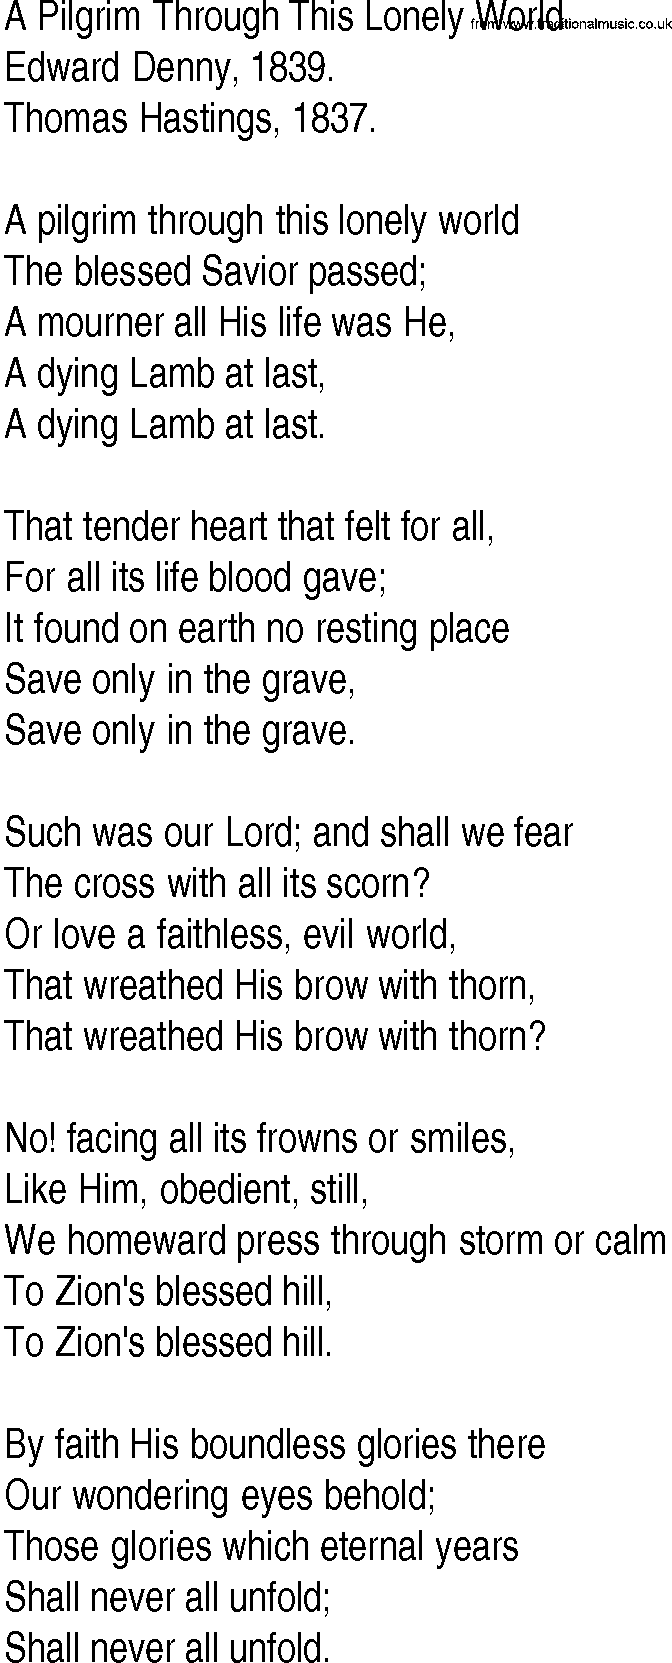 Hymn and Gospel Song: A Pilgrim Through This Lonely World by Edward Denny lyrics